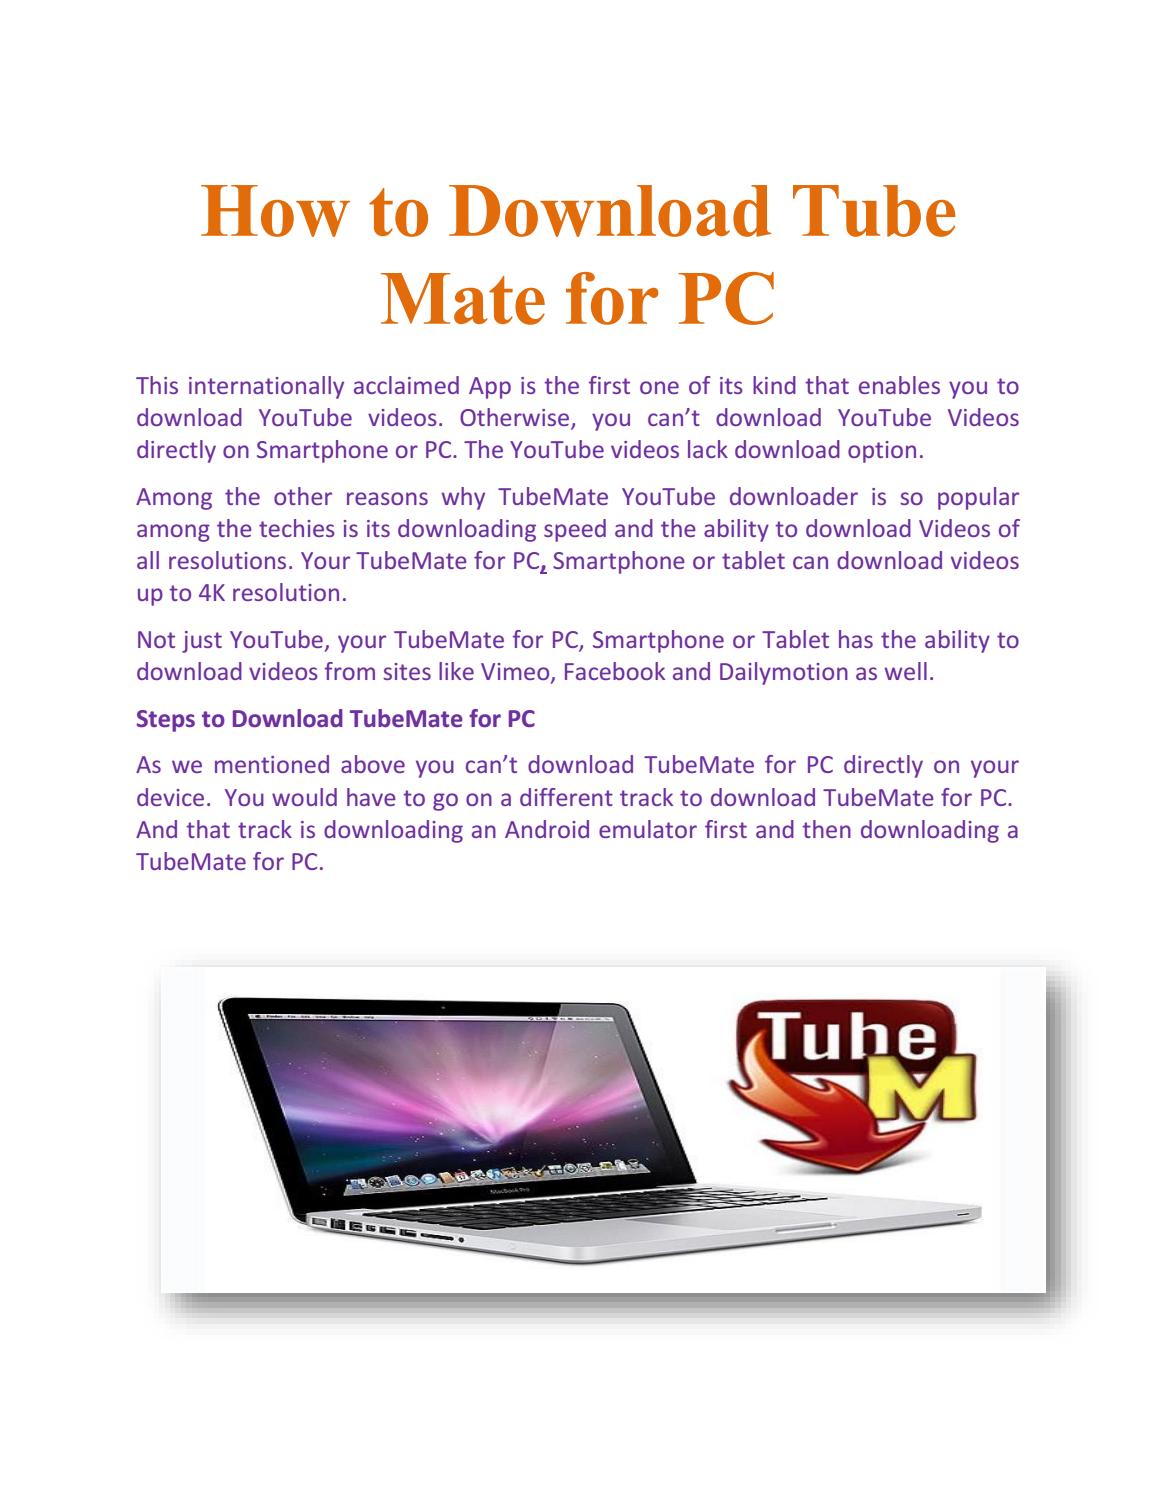 tubemate app for tablet